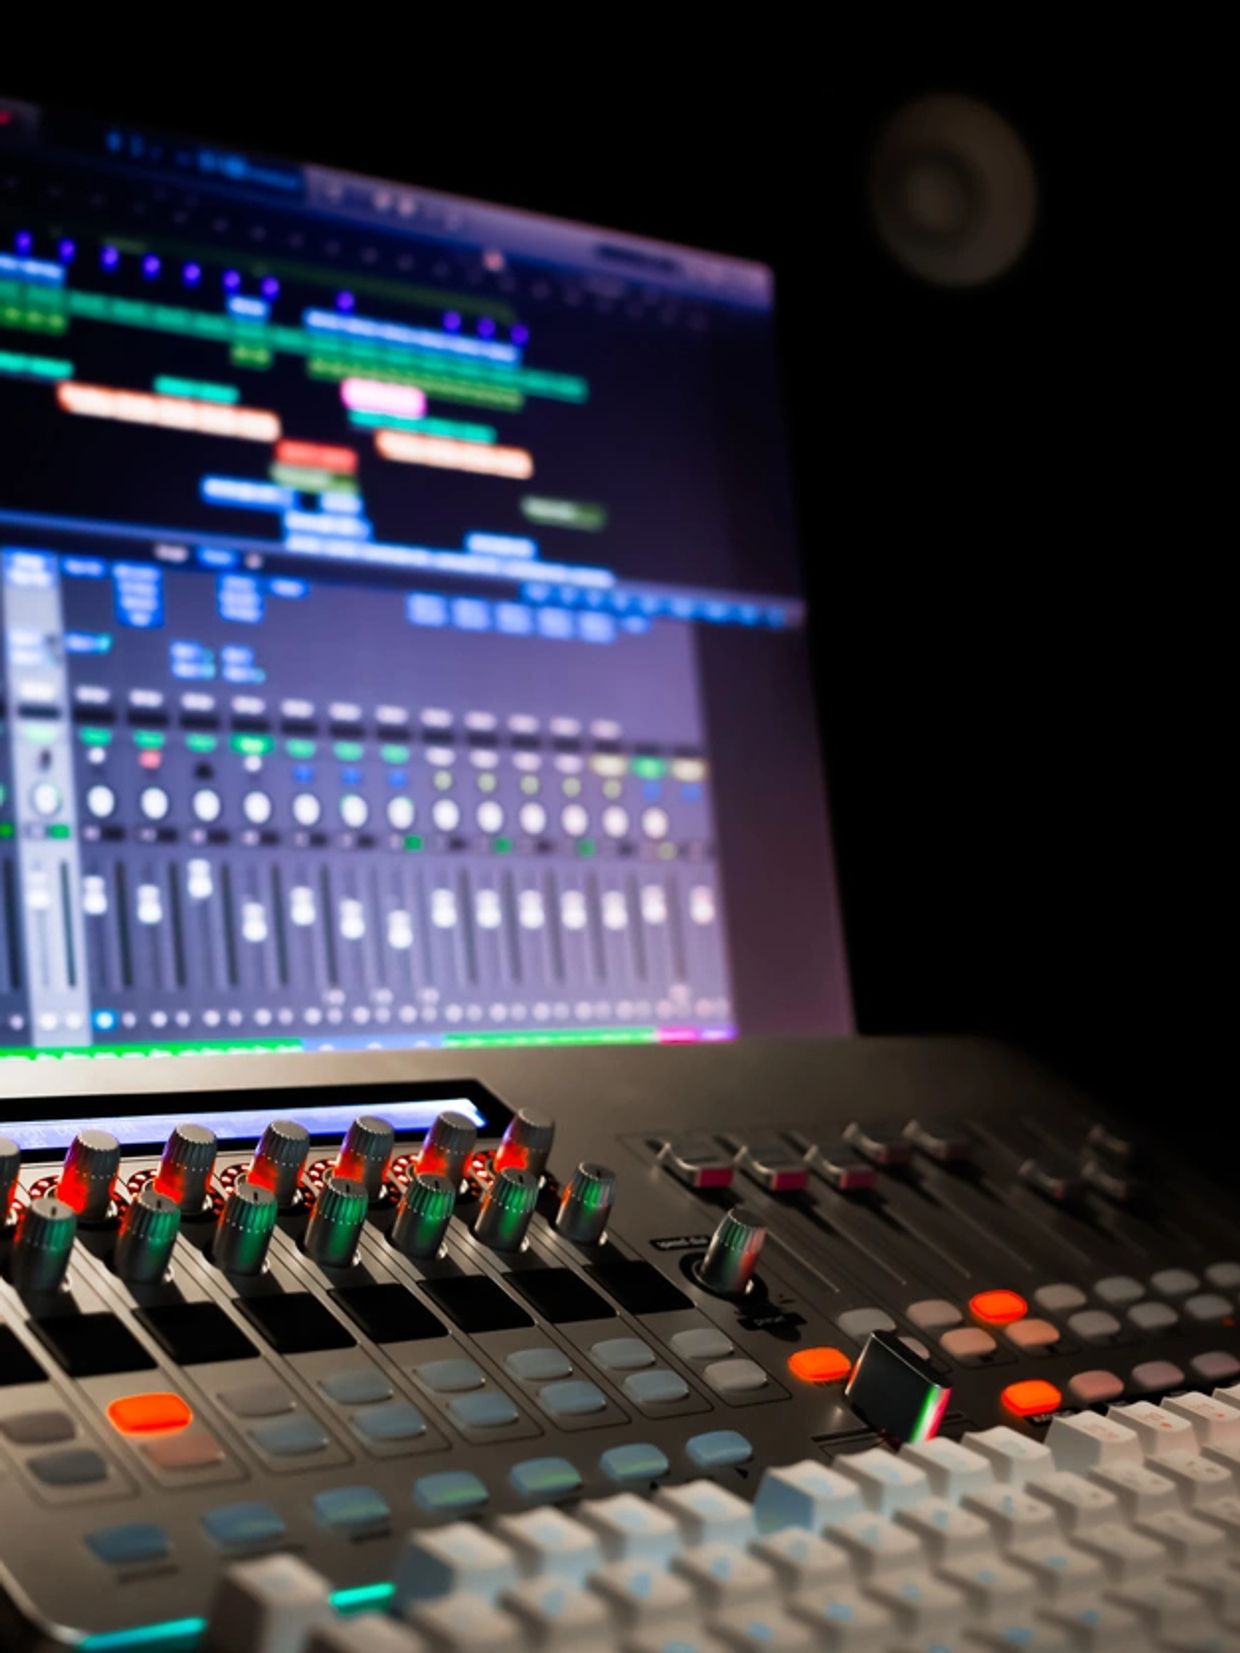 audio mixing
voice mixing
surround sound mix
mixer